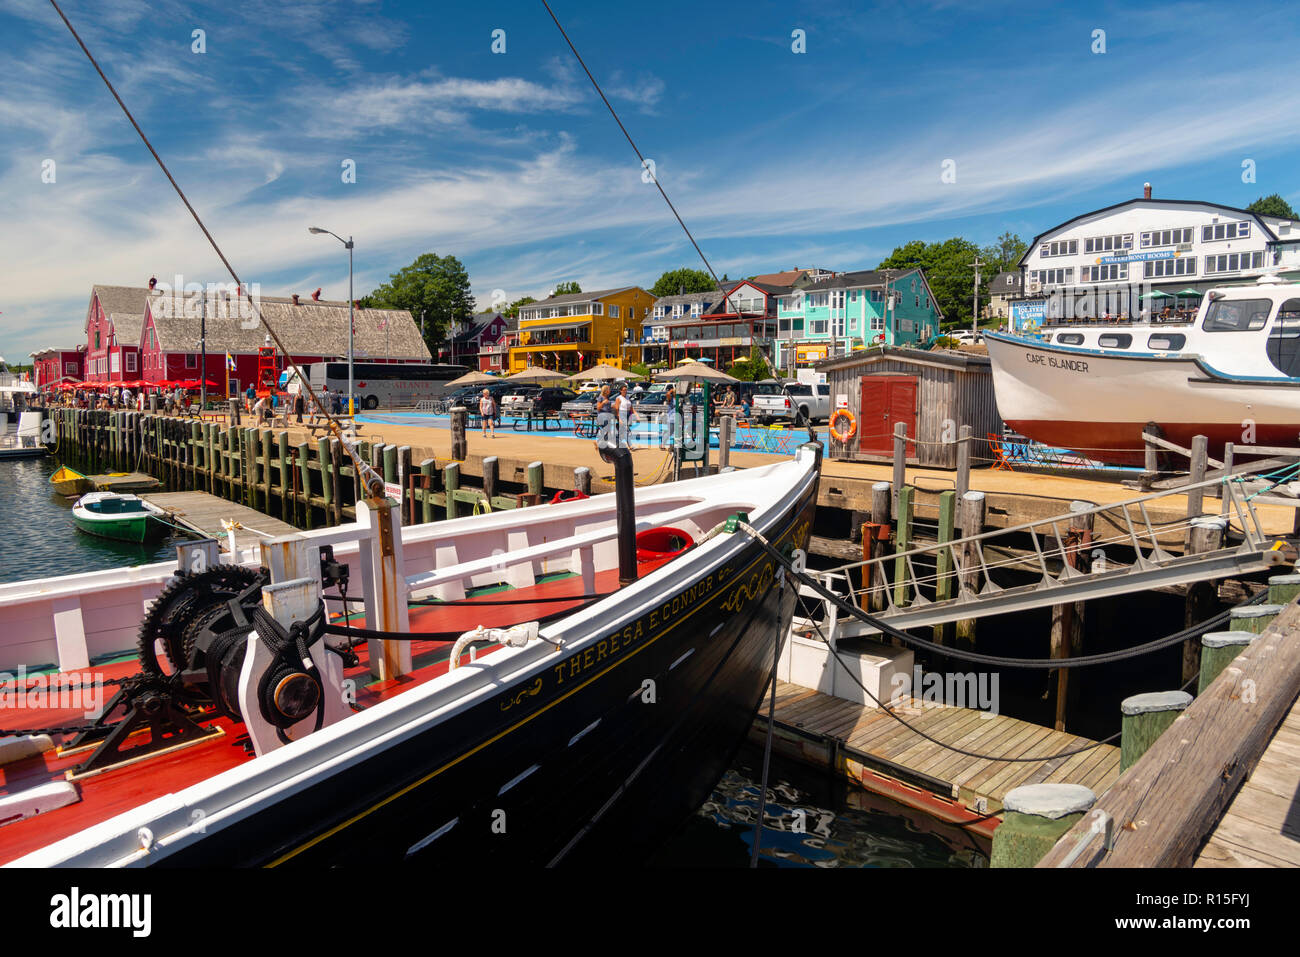 Down on the docks at famous and scenic Lunenburg, Nova Scotia, Canada. Stock Photo